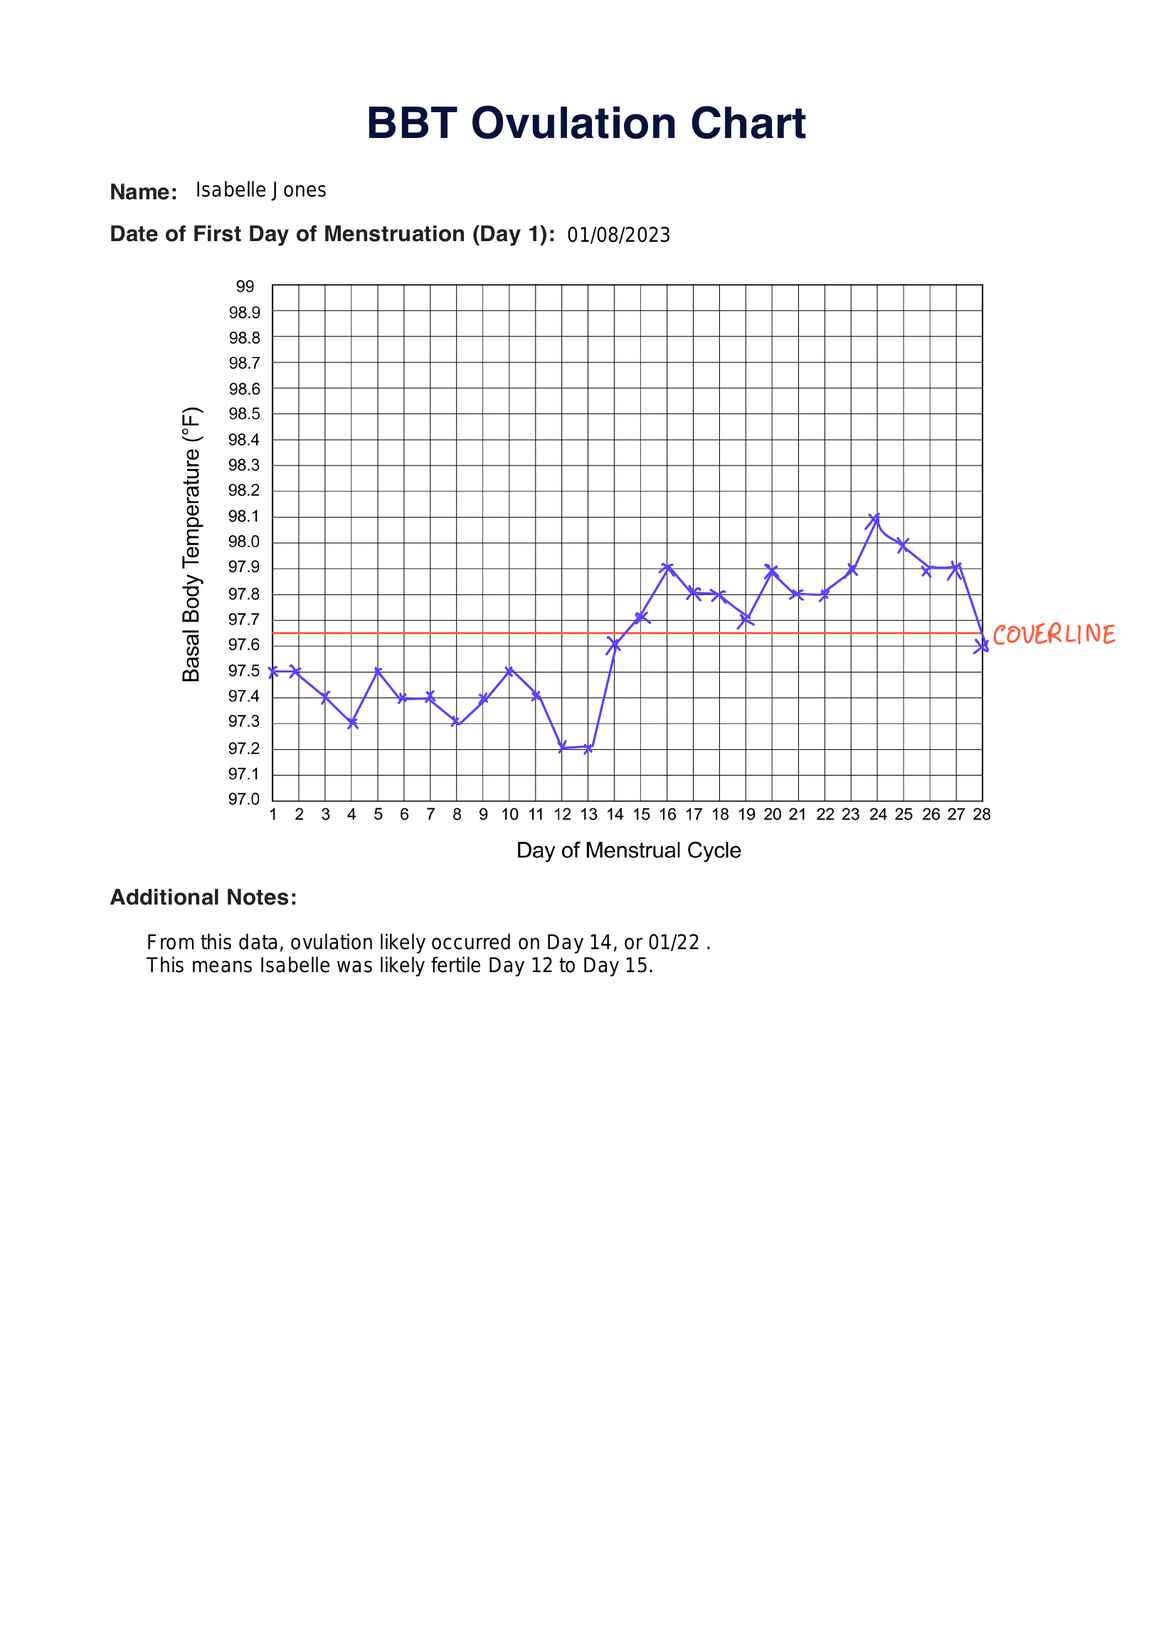 BBT Ovulation Chart PDF Example